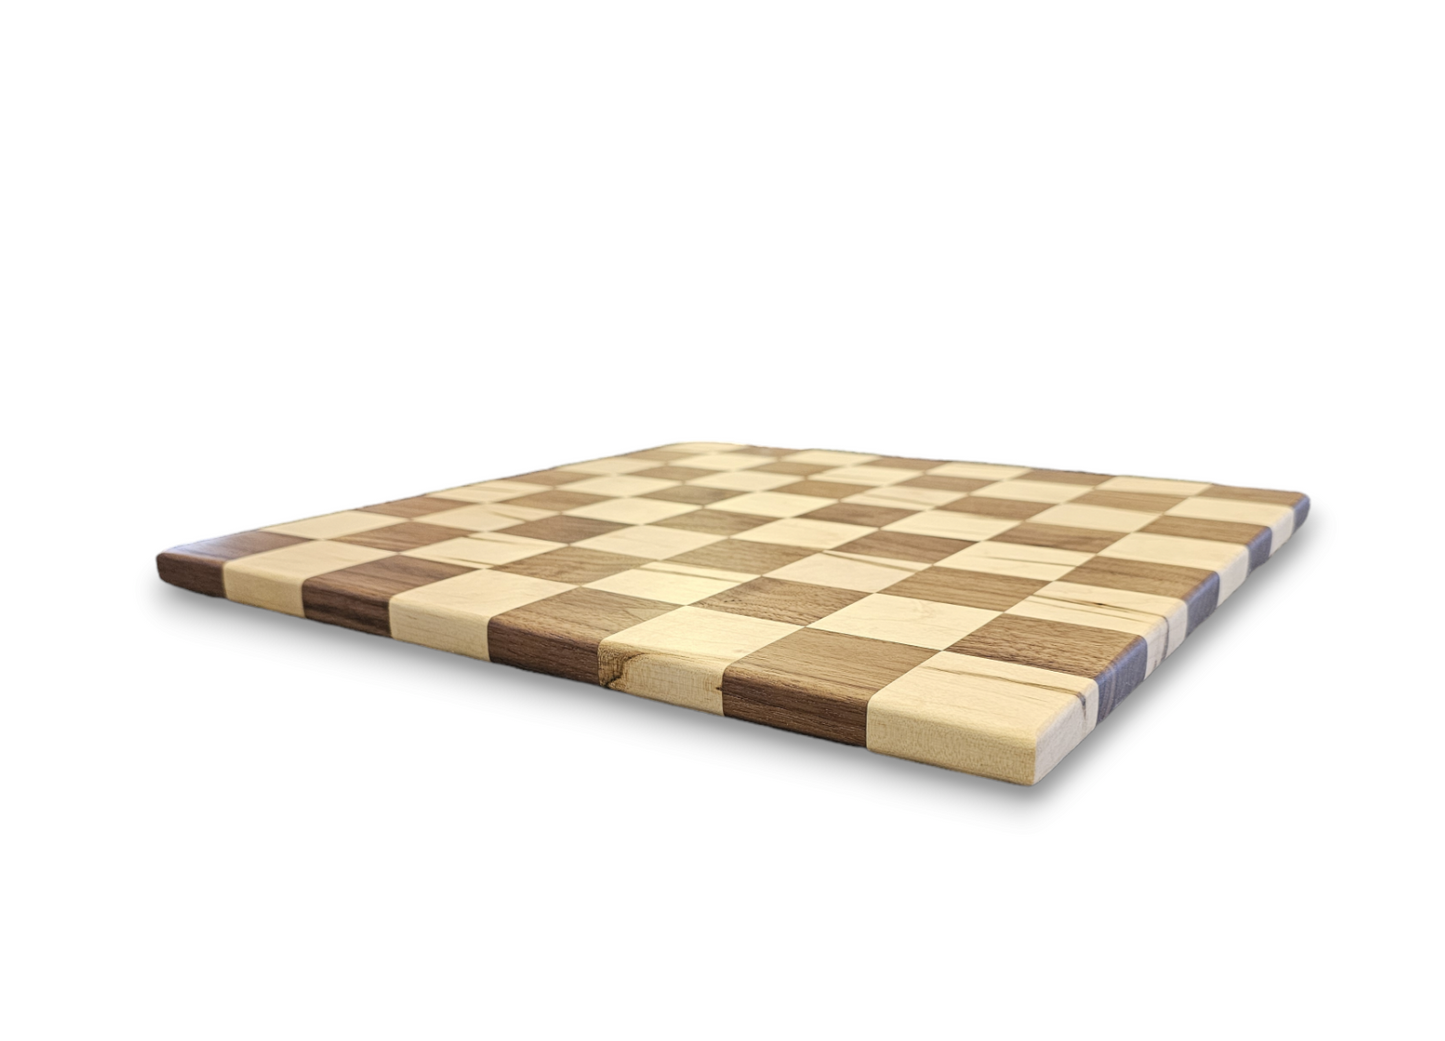 Custom Wood Chessboards